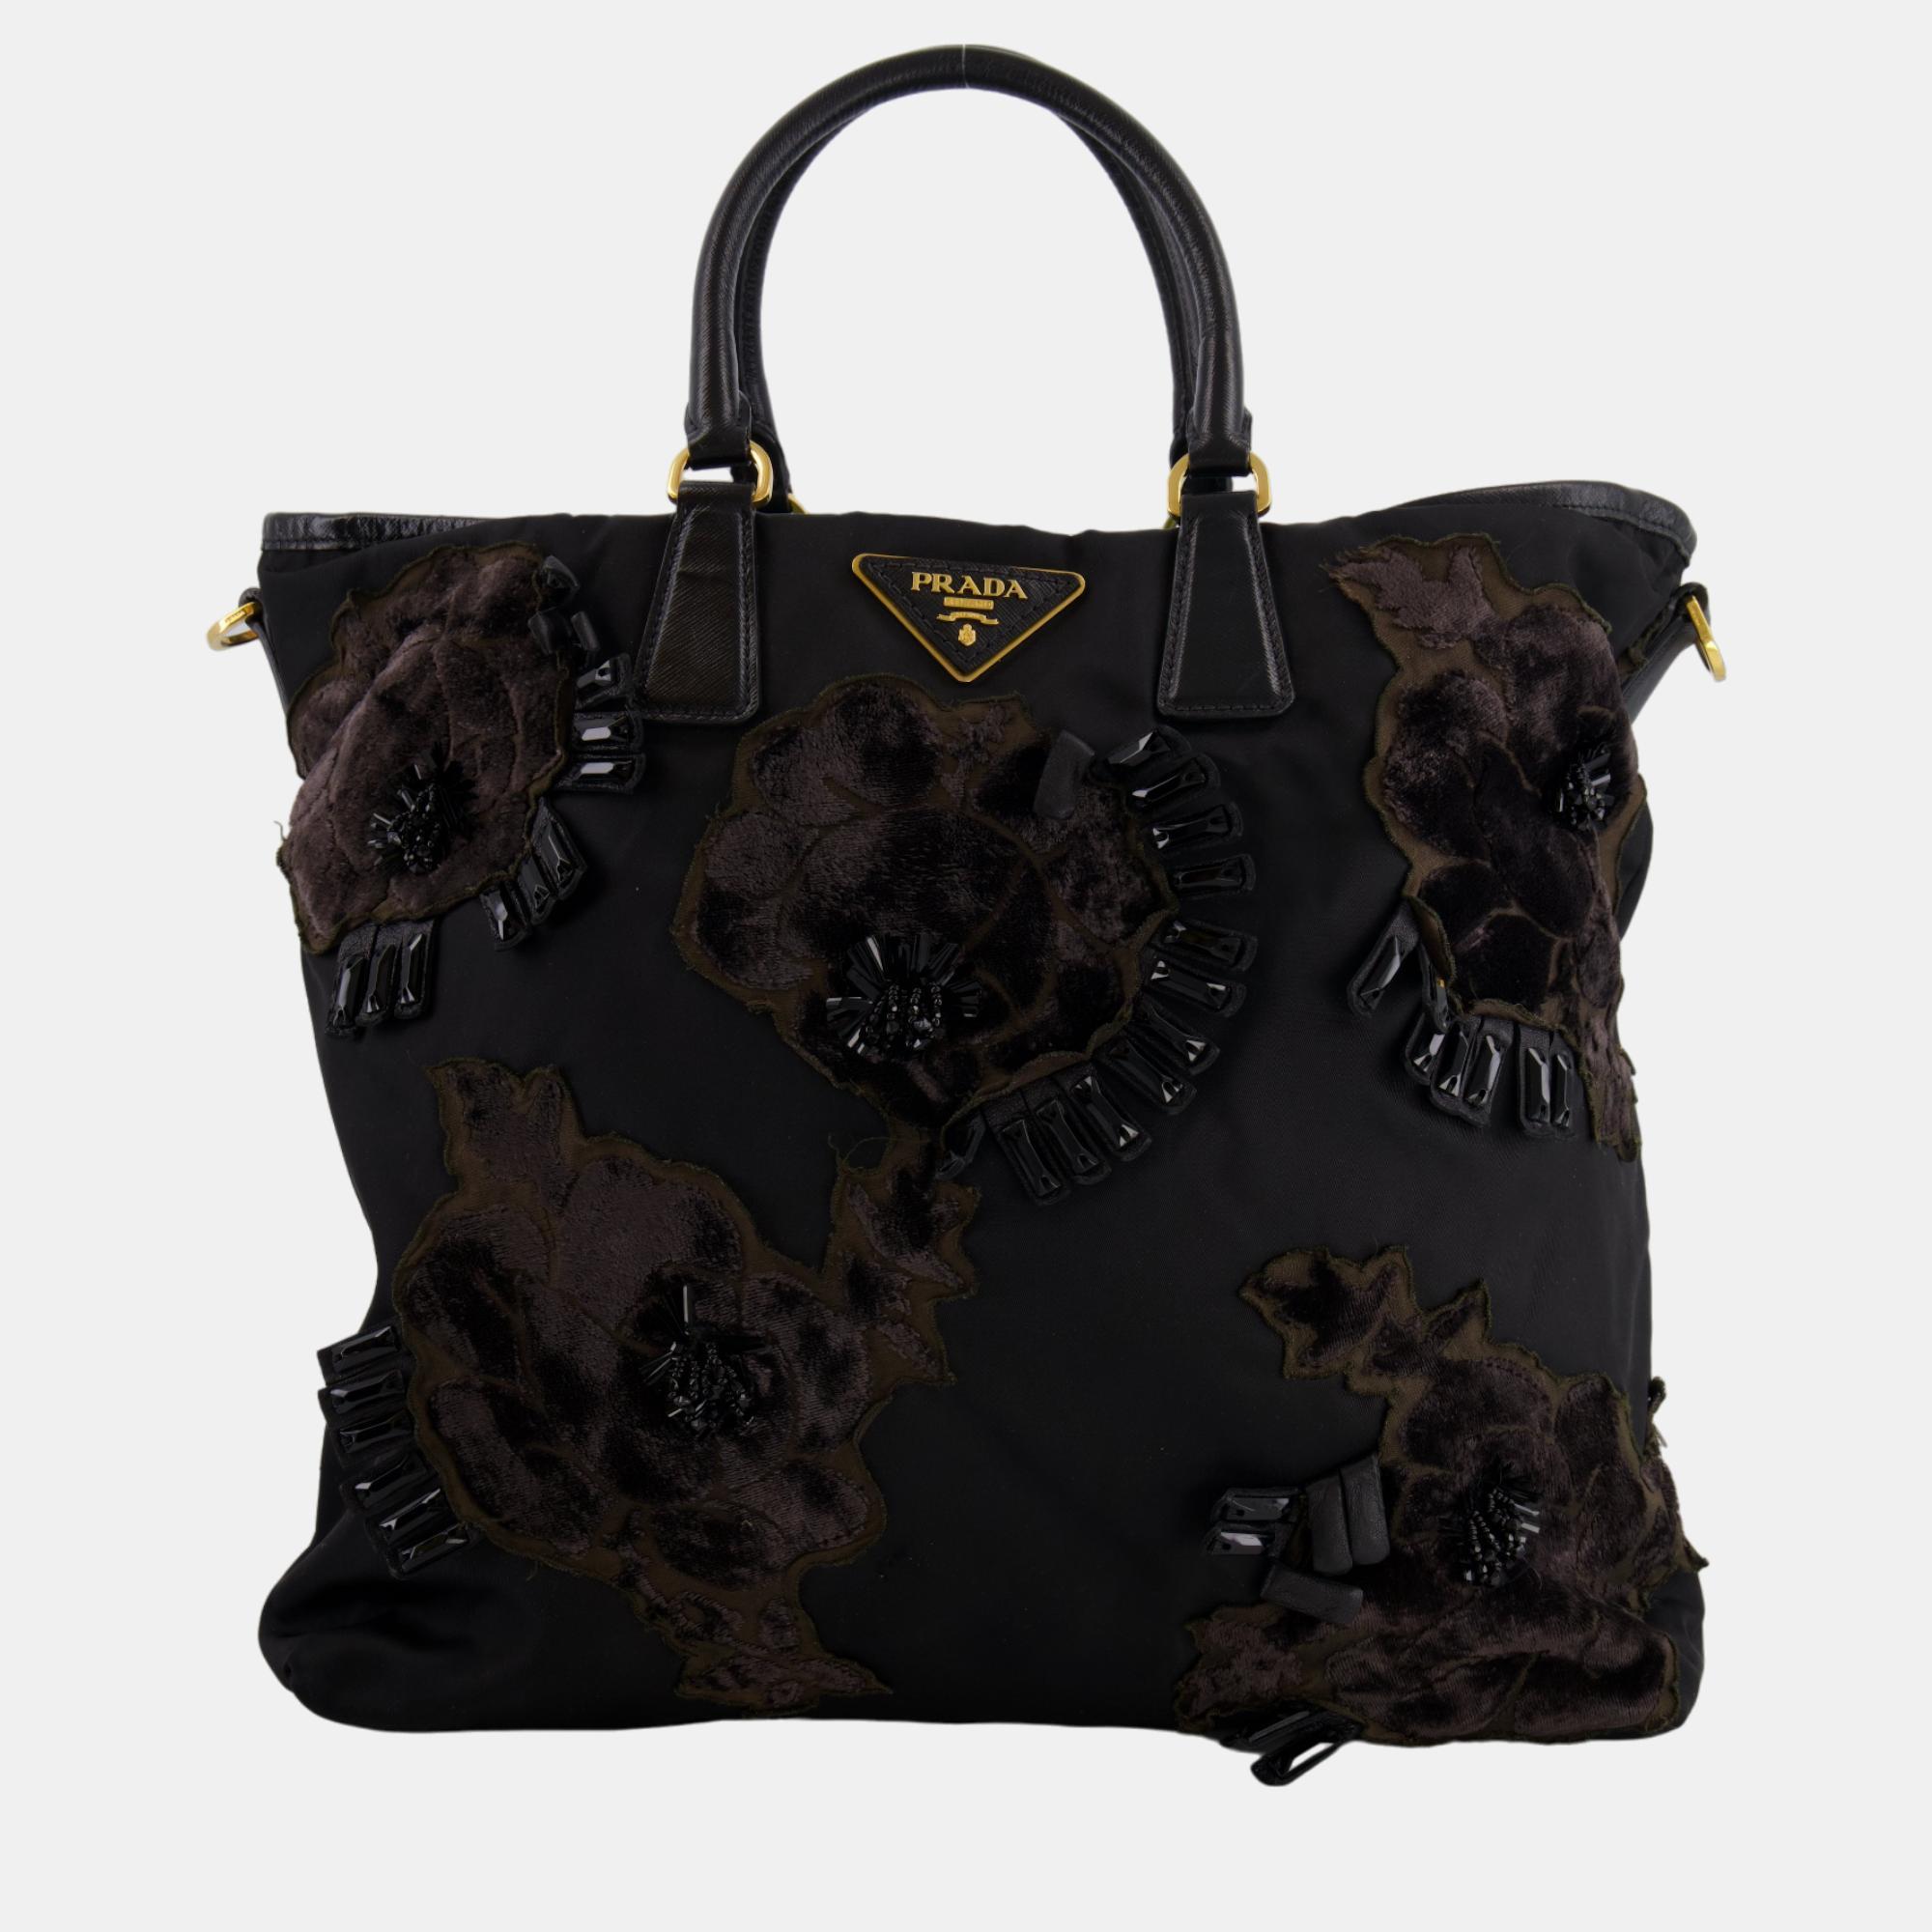 Prada black nylon tote bag with gold hardware, velvet and crystal embroideries